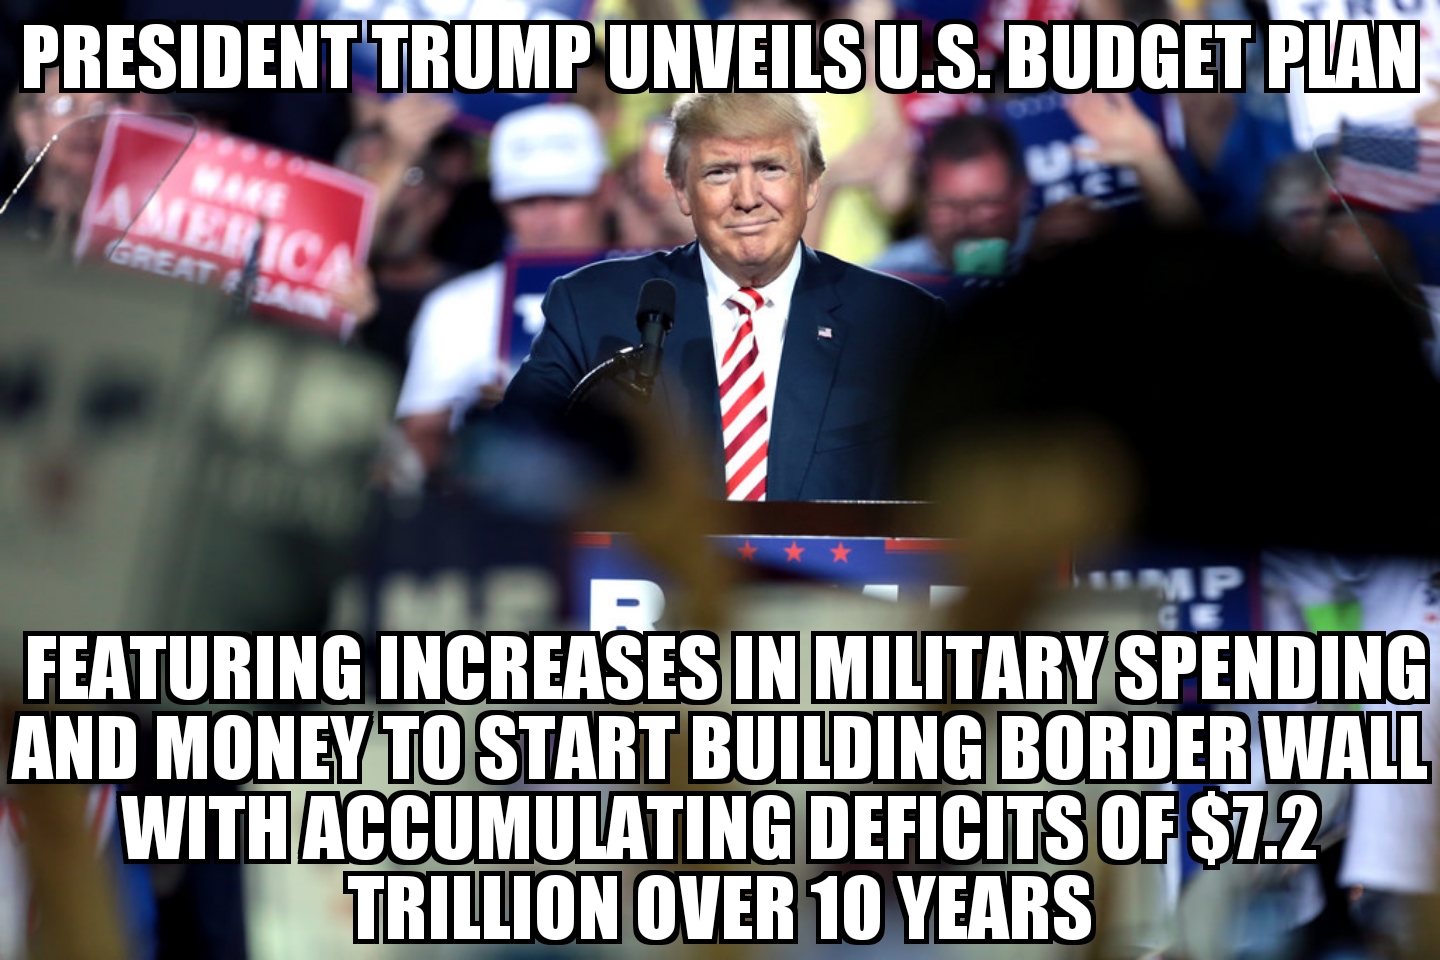 Trump unveils budget plan